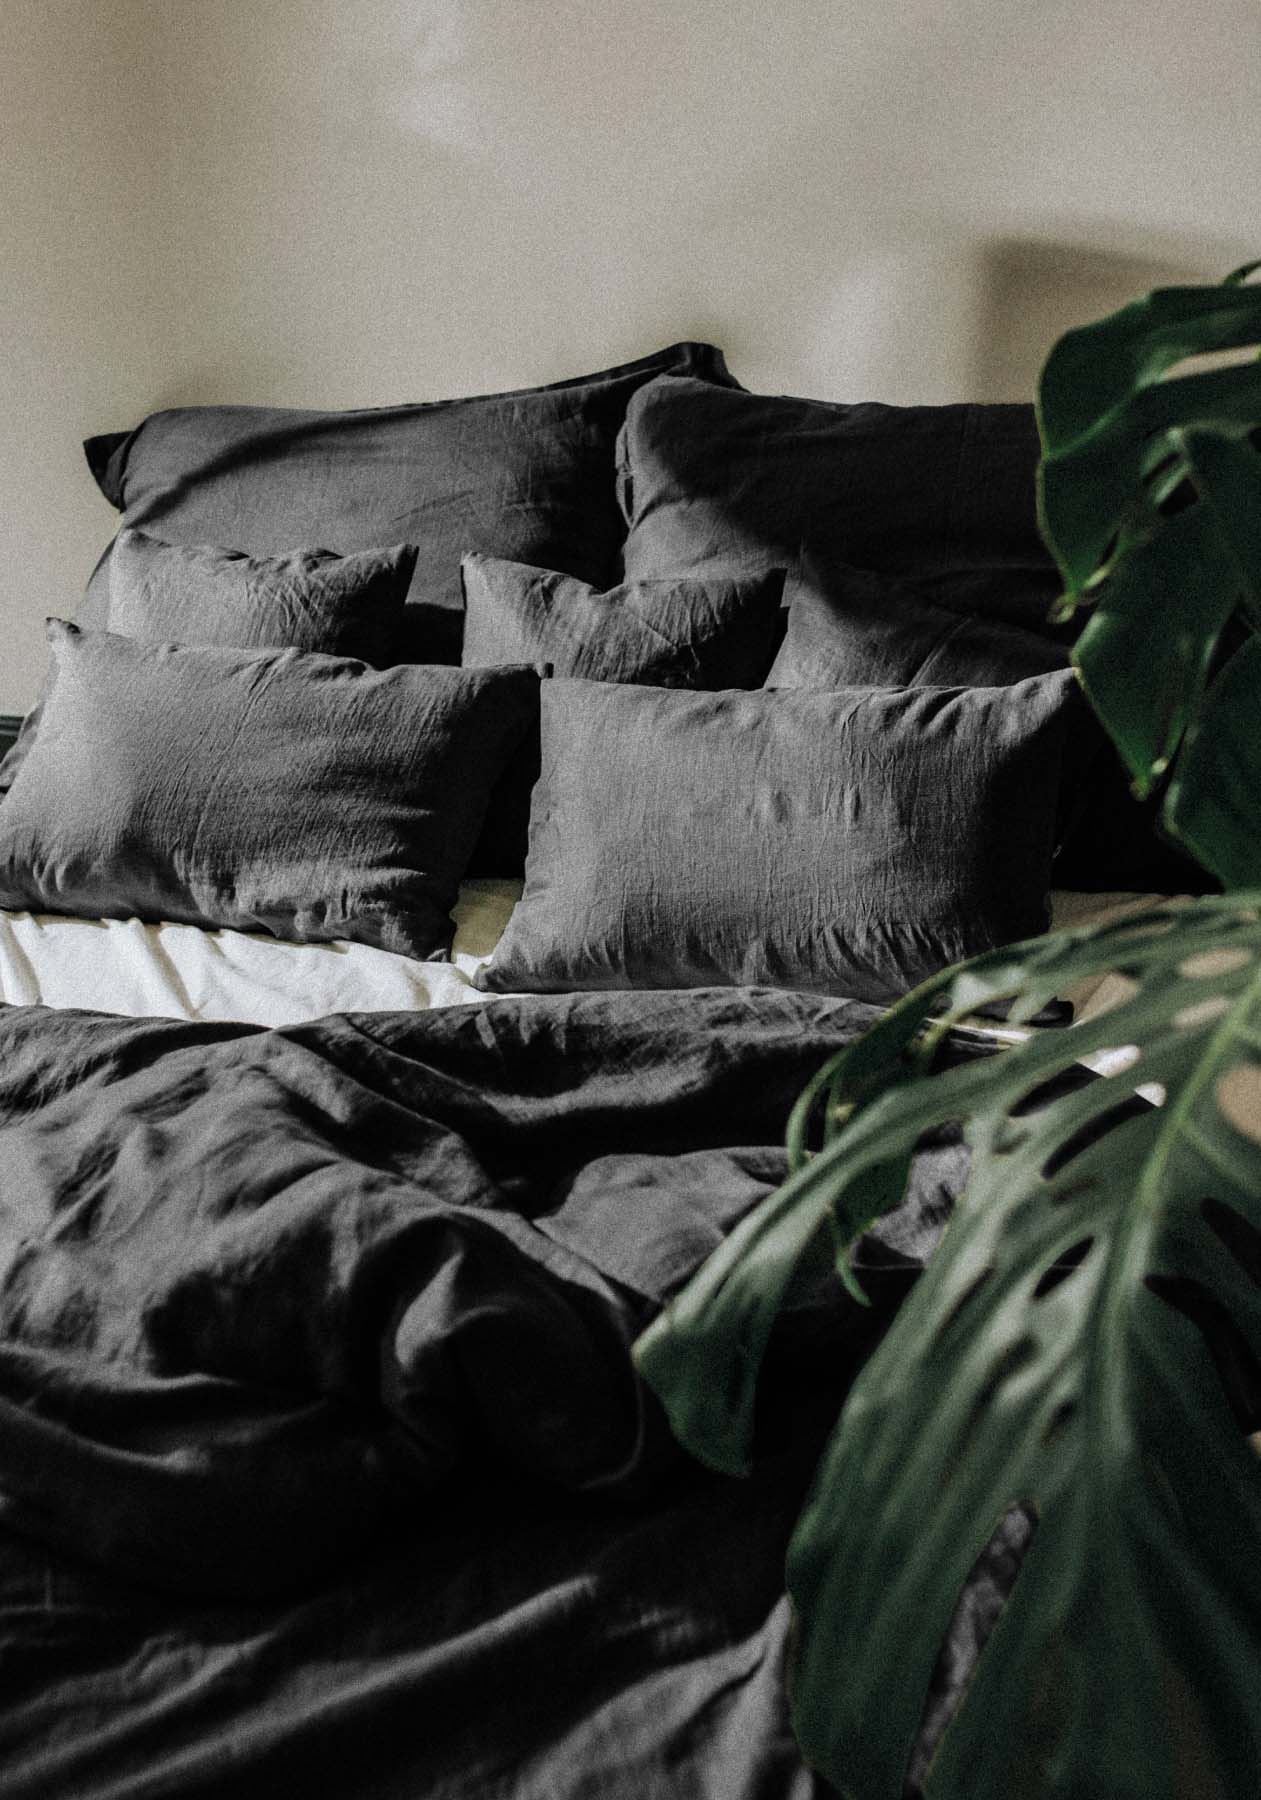 Deco & Home Linen Bedding Black